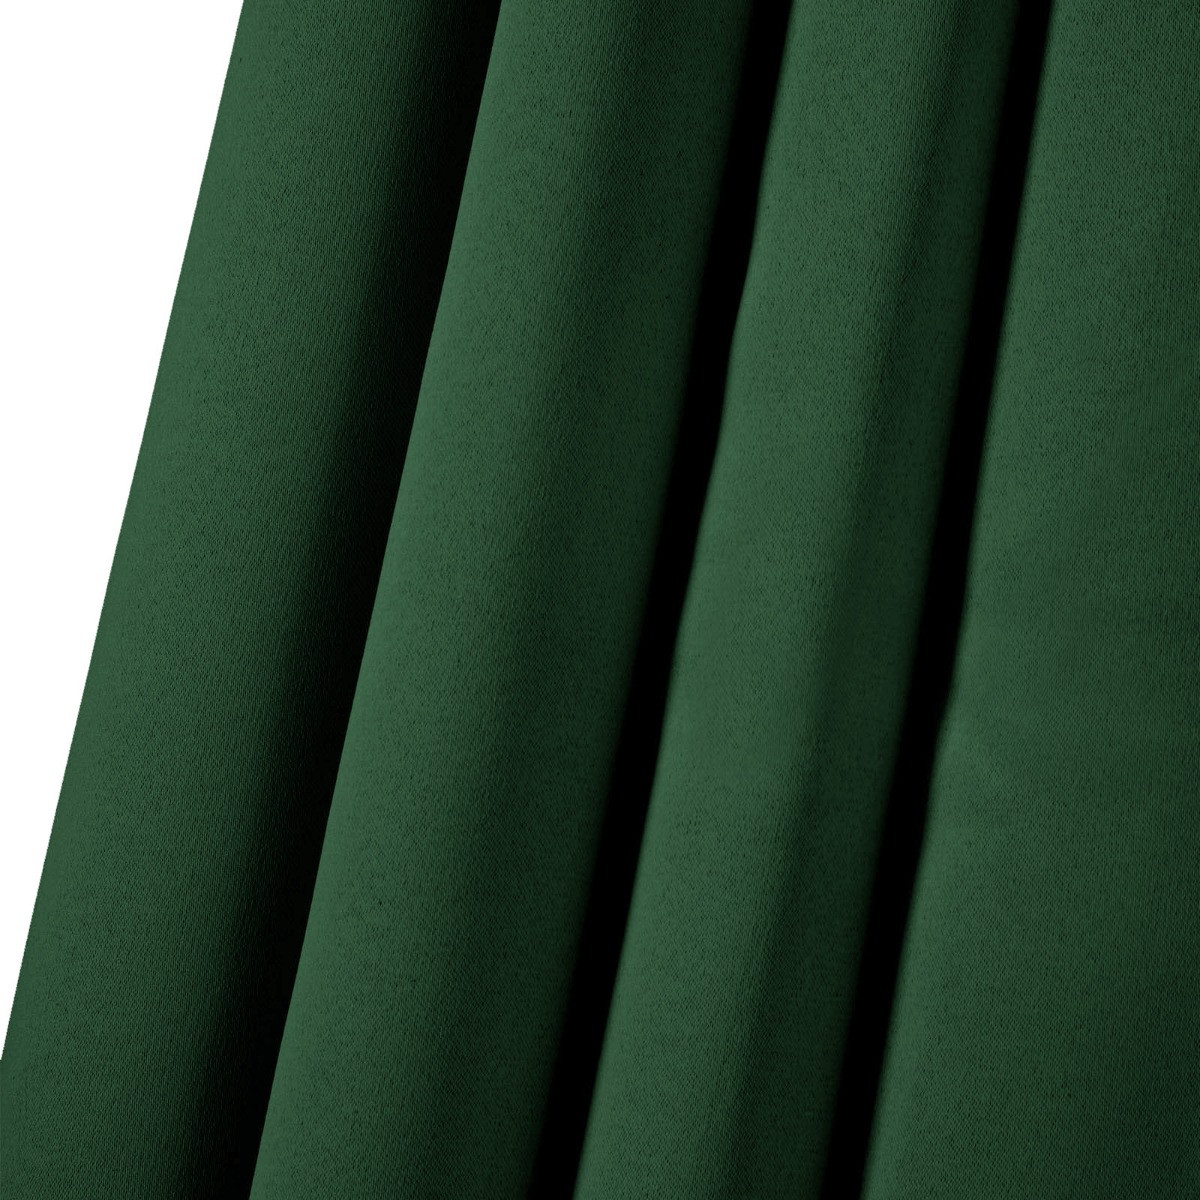 Dreamscene Eyelet Blackout Curtains, Forest Green - 117 x 182cm (46" x 72")>